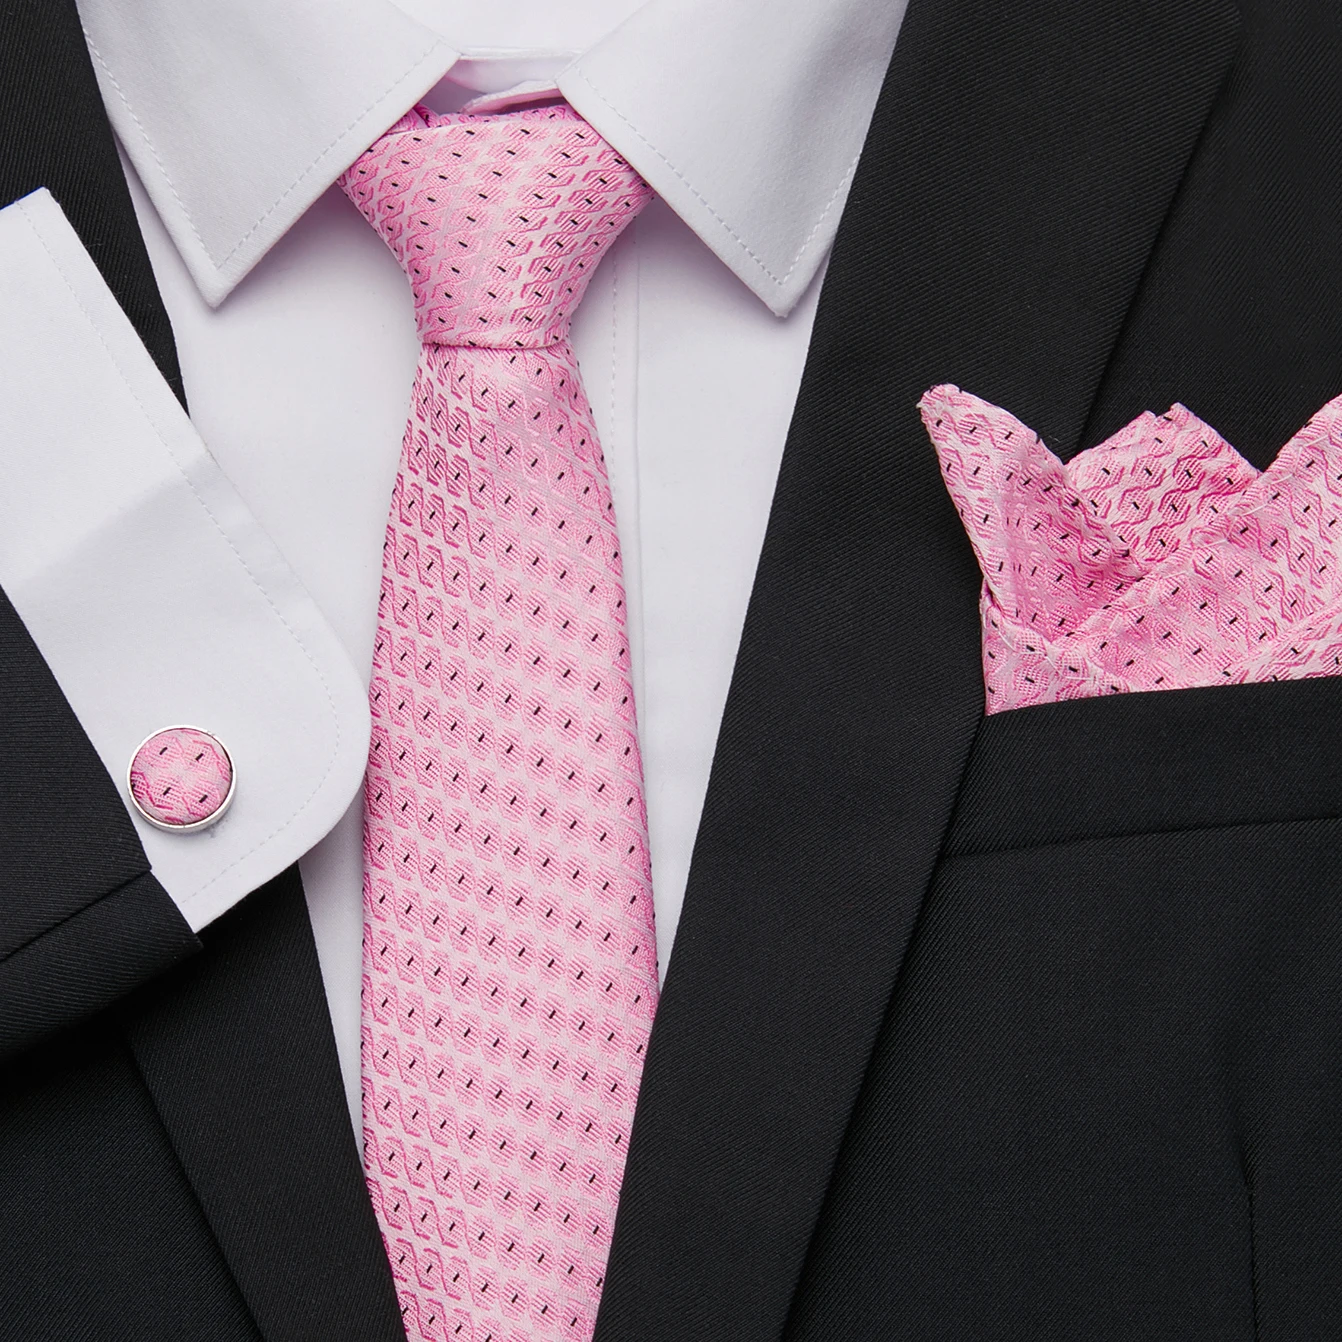 

Hot sale Tie Handkerchief Pocket Squares Cufflink Set Tie Clip Necktie Clothing accessories Male Polka dot April Fool's Day